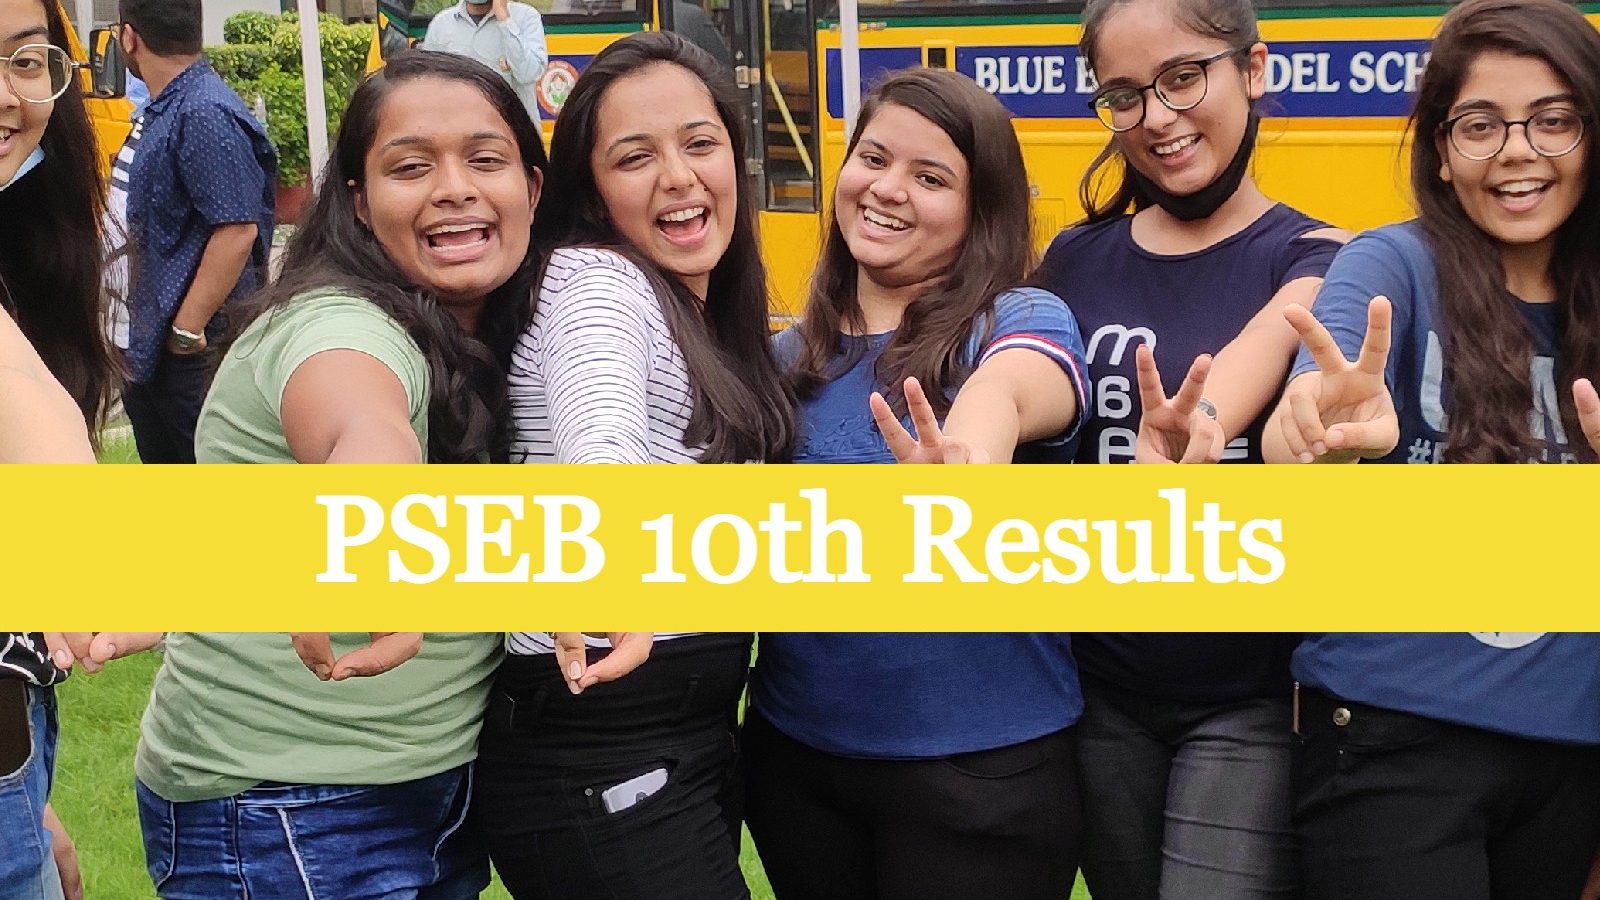 PSEB 10th Result 2022